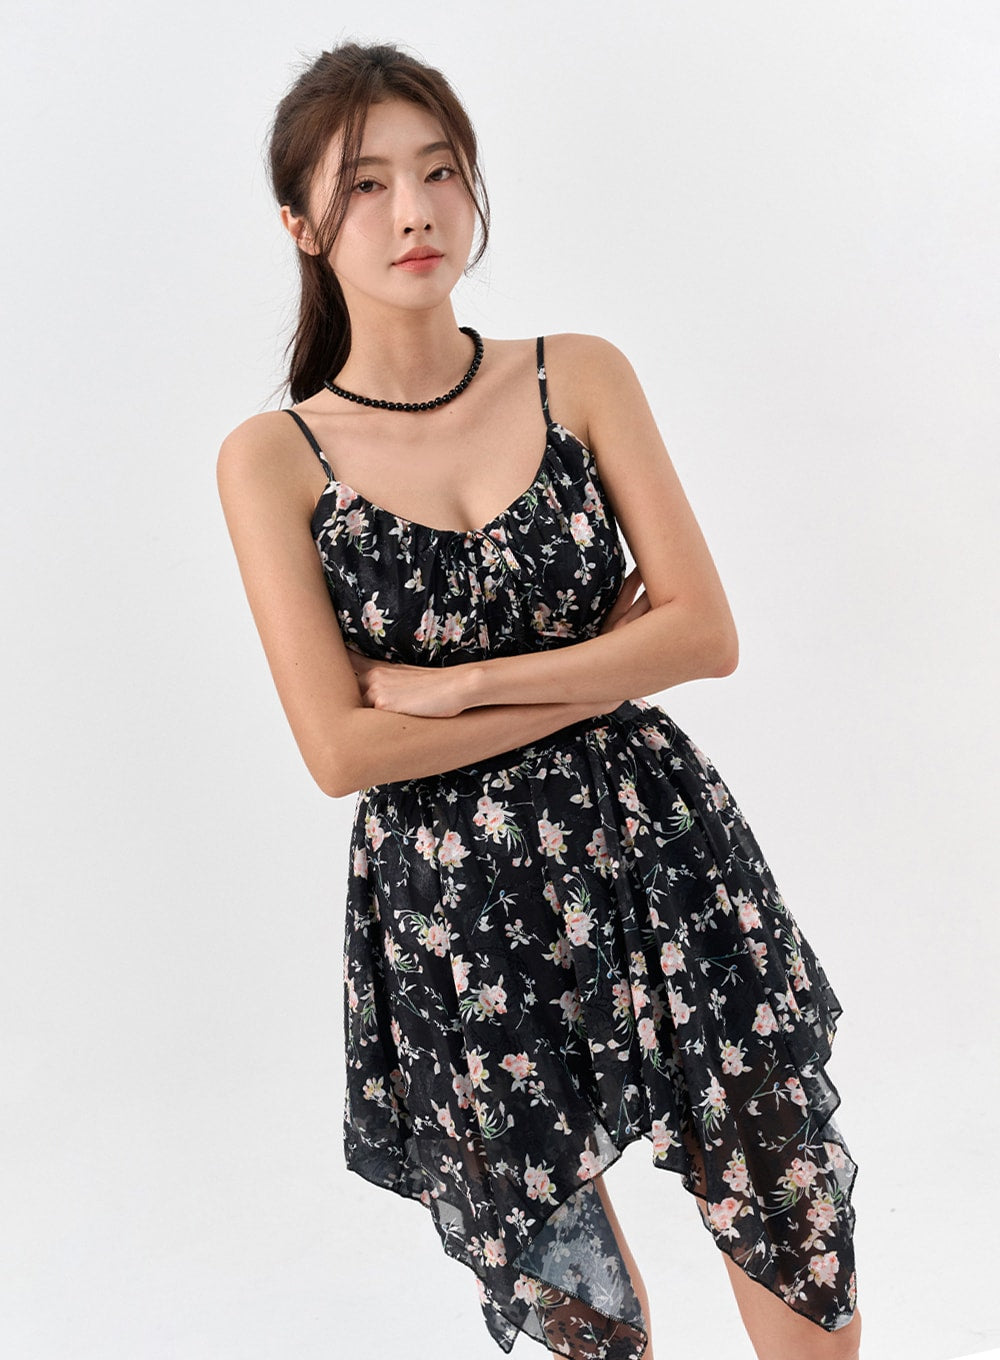 retro-floral-mini-dress-io311